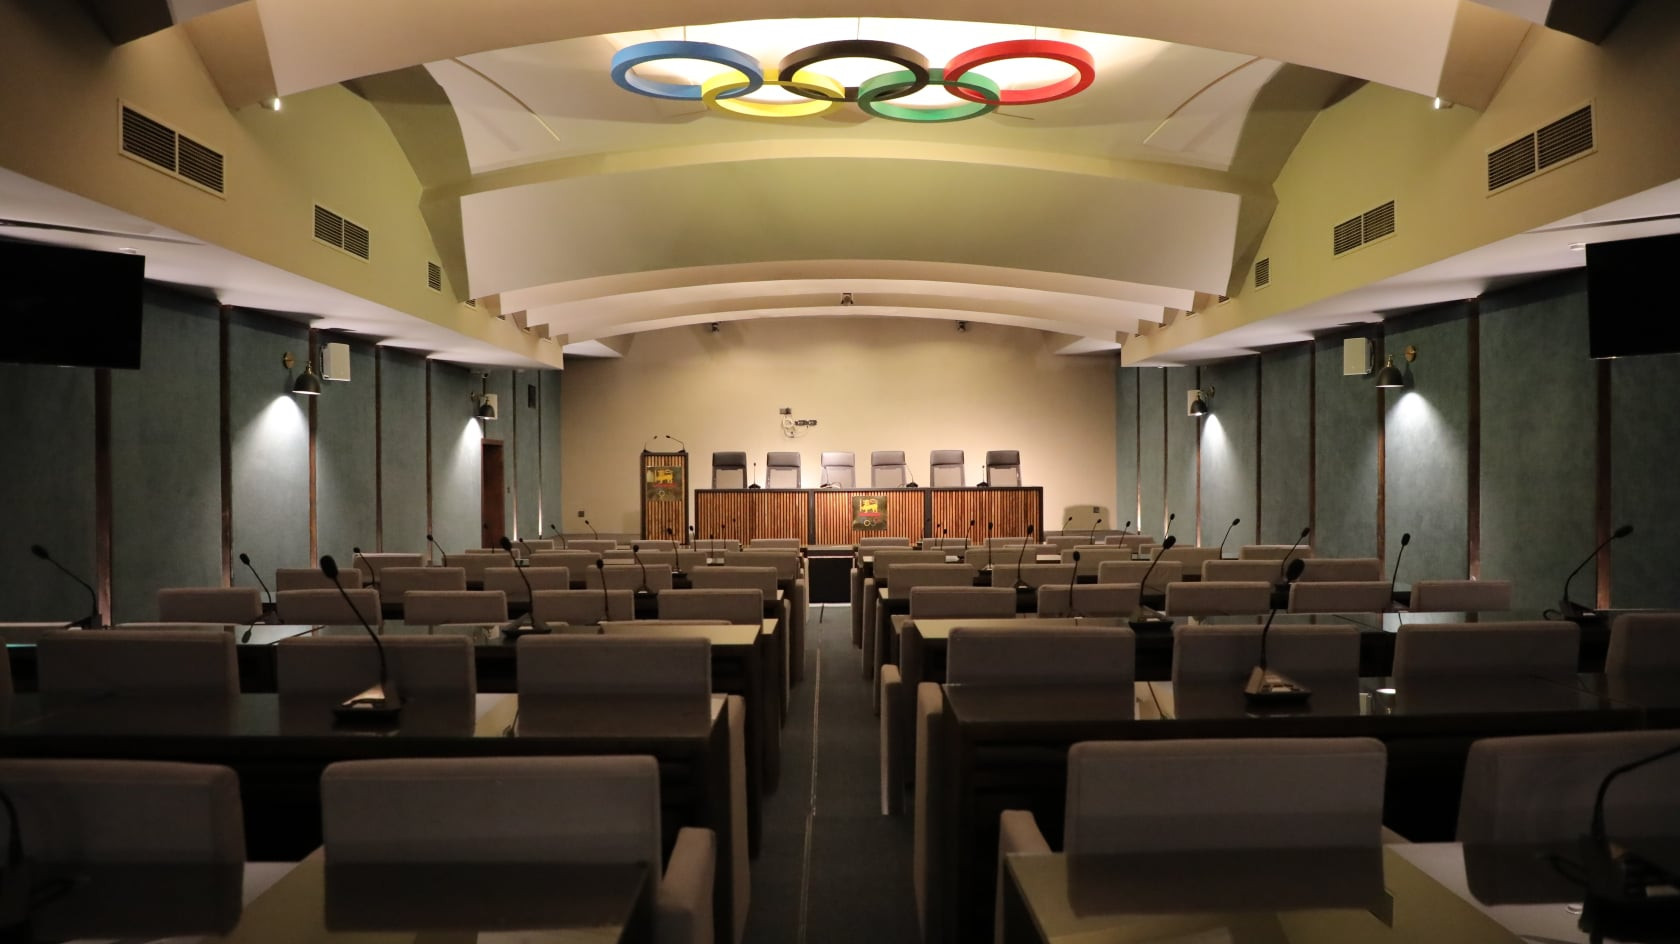 The National Olympic Committee of Sri Lanka has re-opened the upgraded Hemasiri Fernando Auditorium ©NOCSL